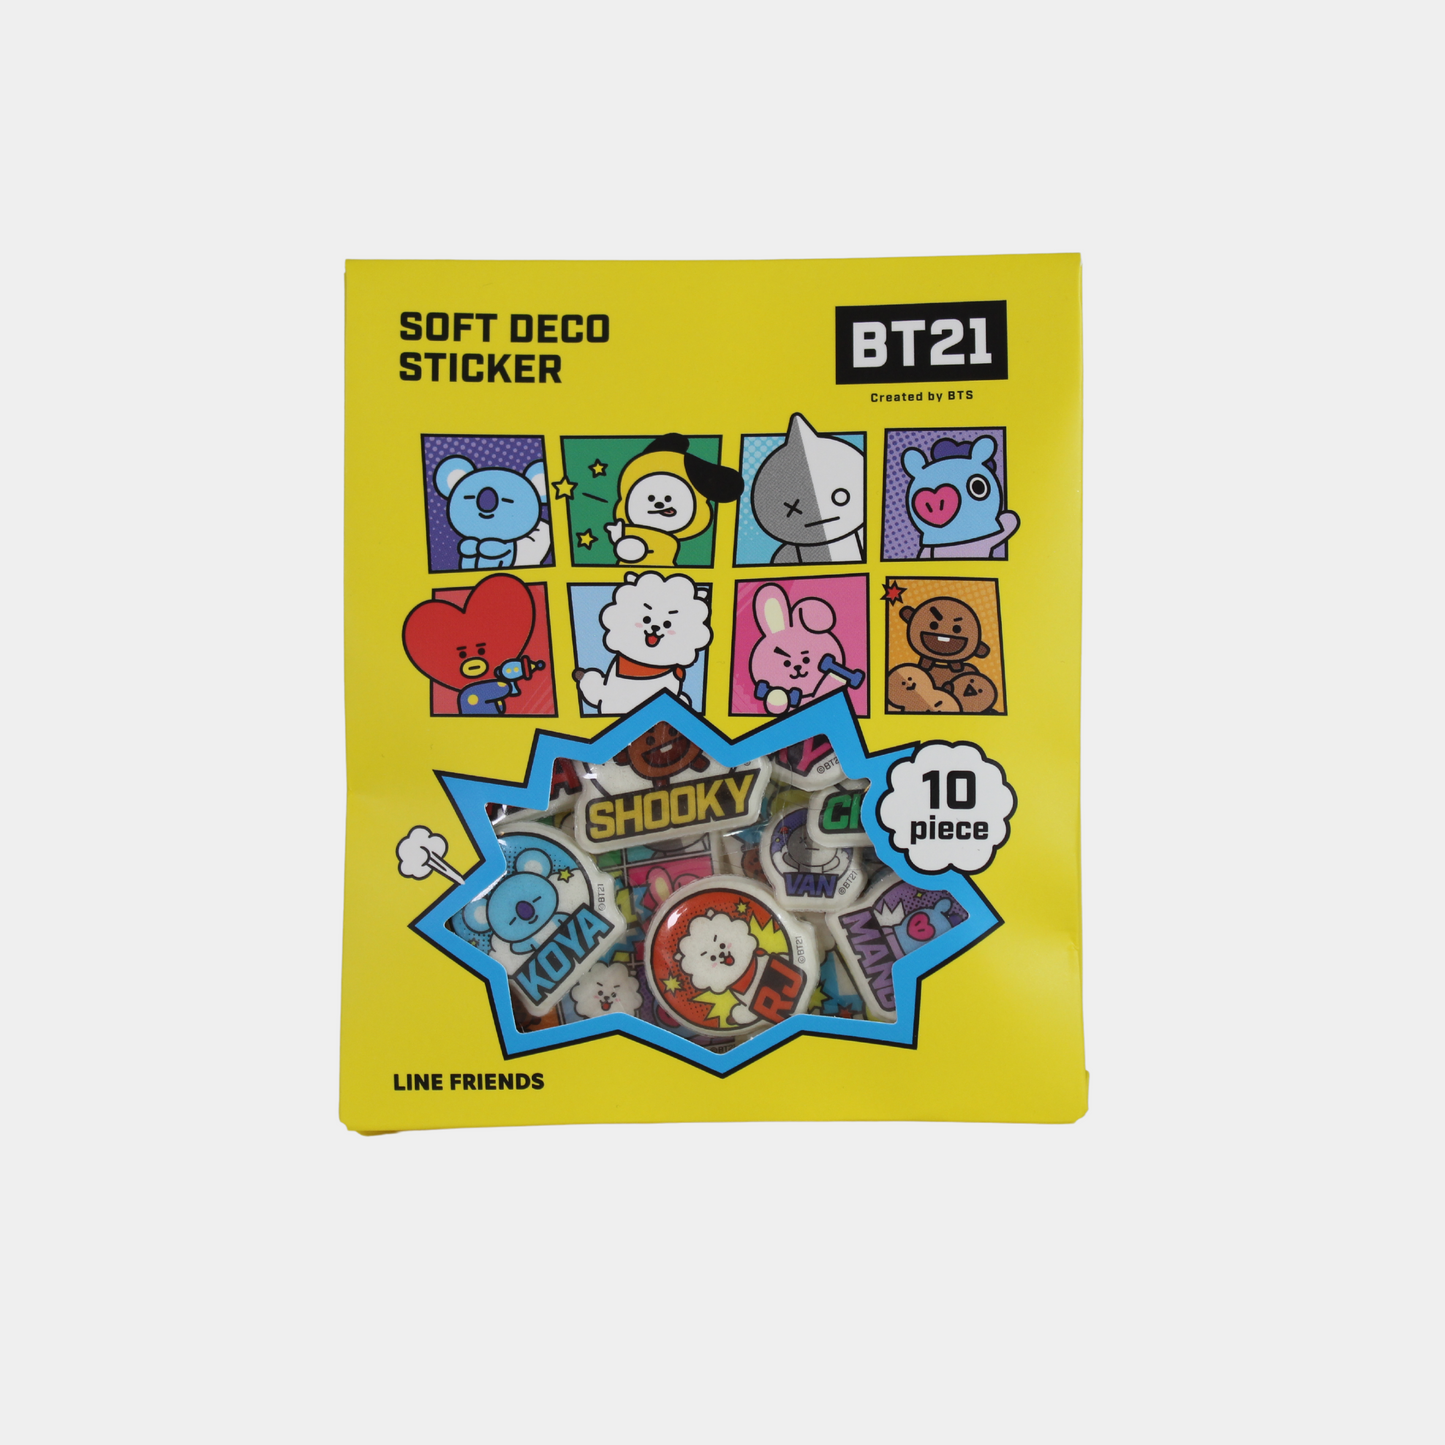 BT21 Soft Deco Stickers (Comic pop)